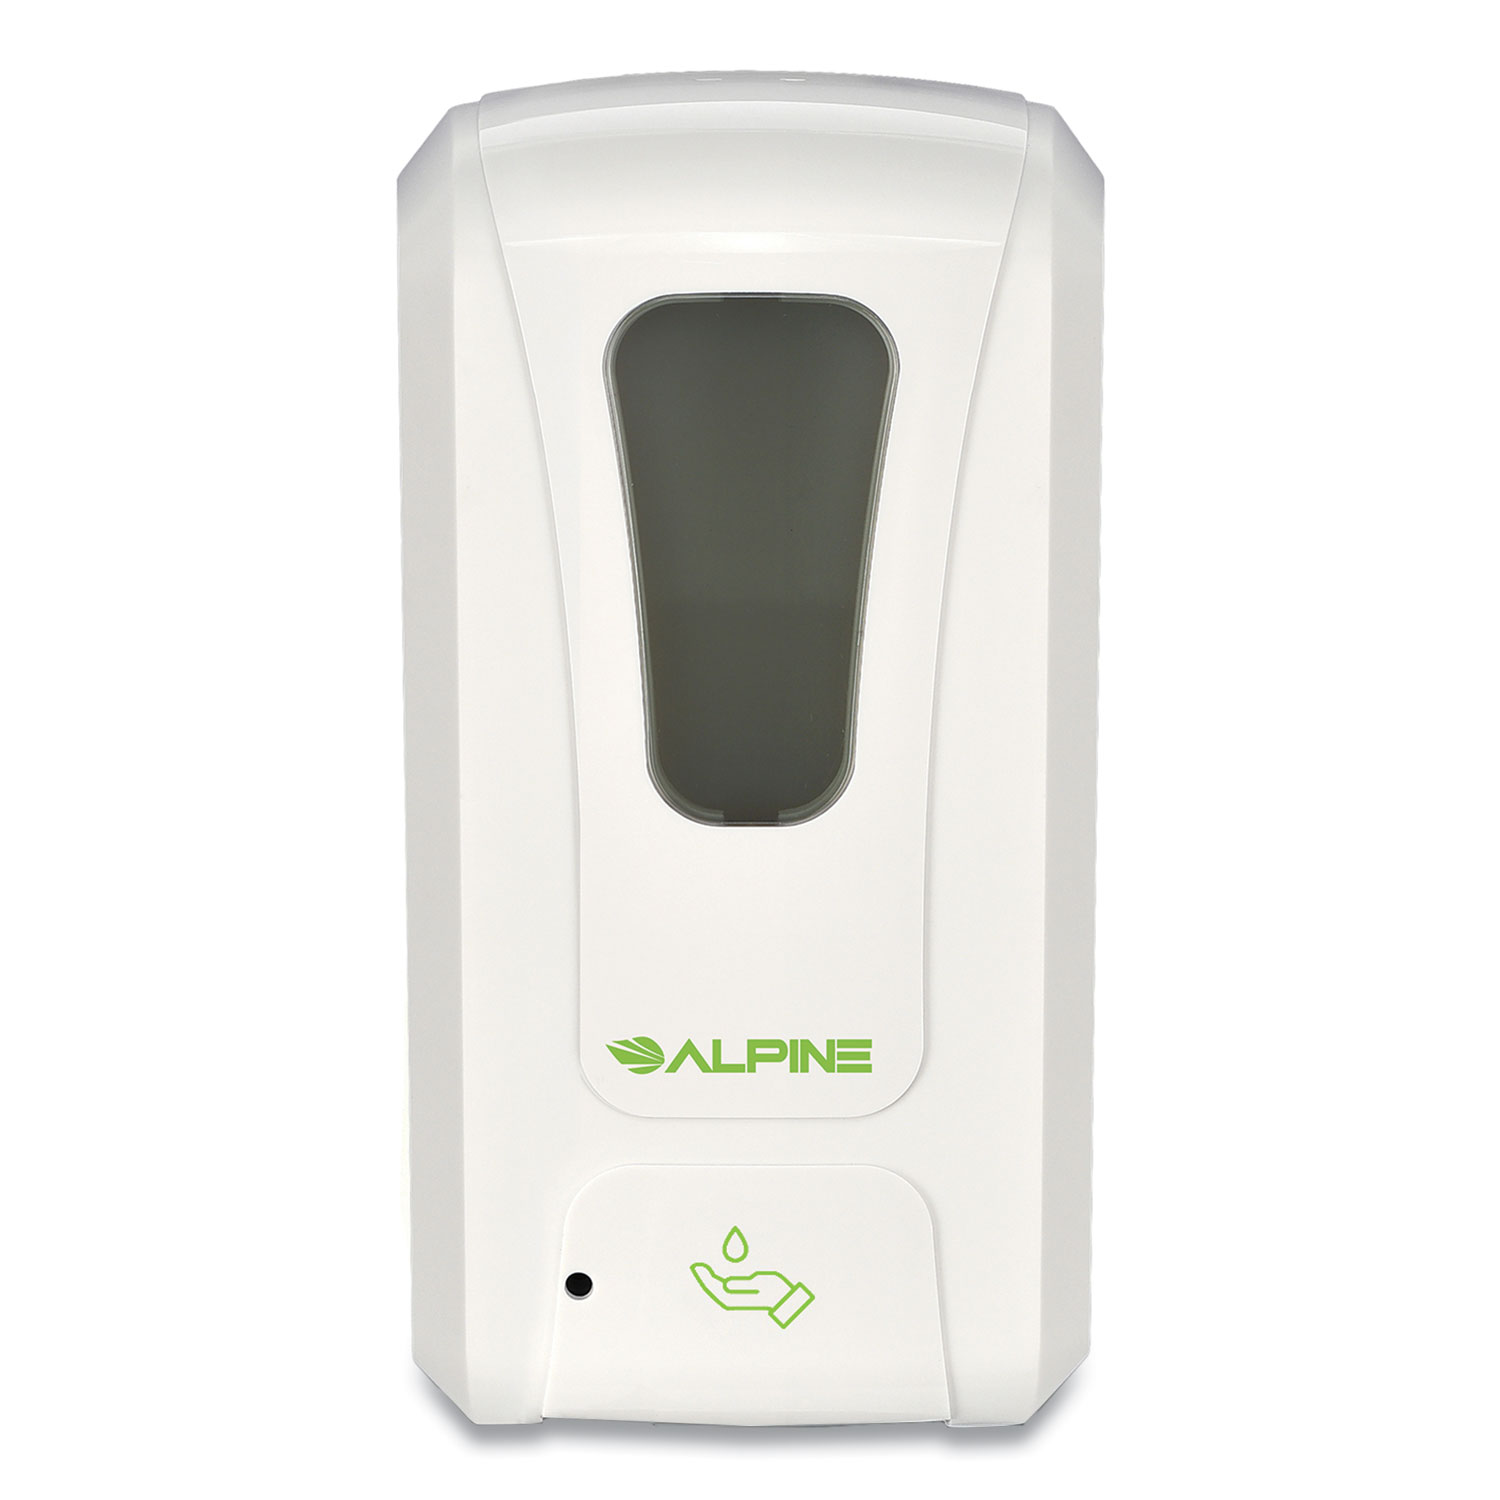  Alpine 430S Automatic Hands-Free Liquid Hand Sanitizer/Soap Dispenser, 1,200 mL, 6 x 4.48 x 11.1, White (GN1430S) 